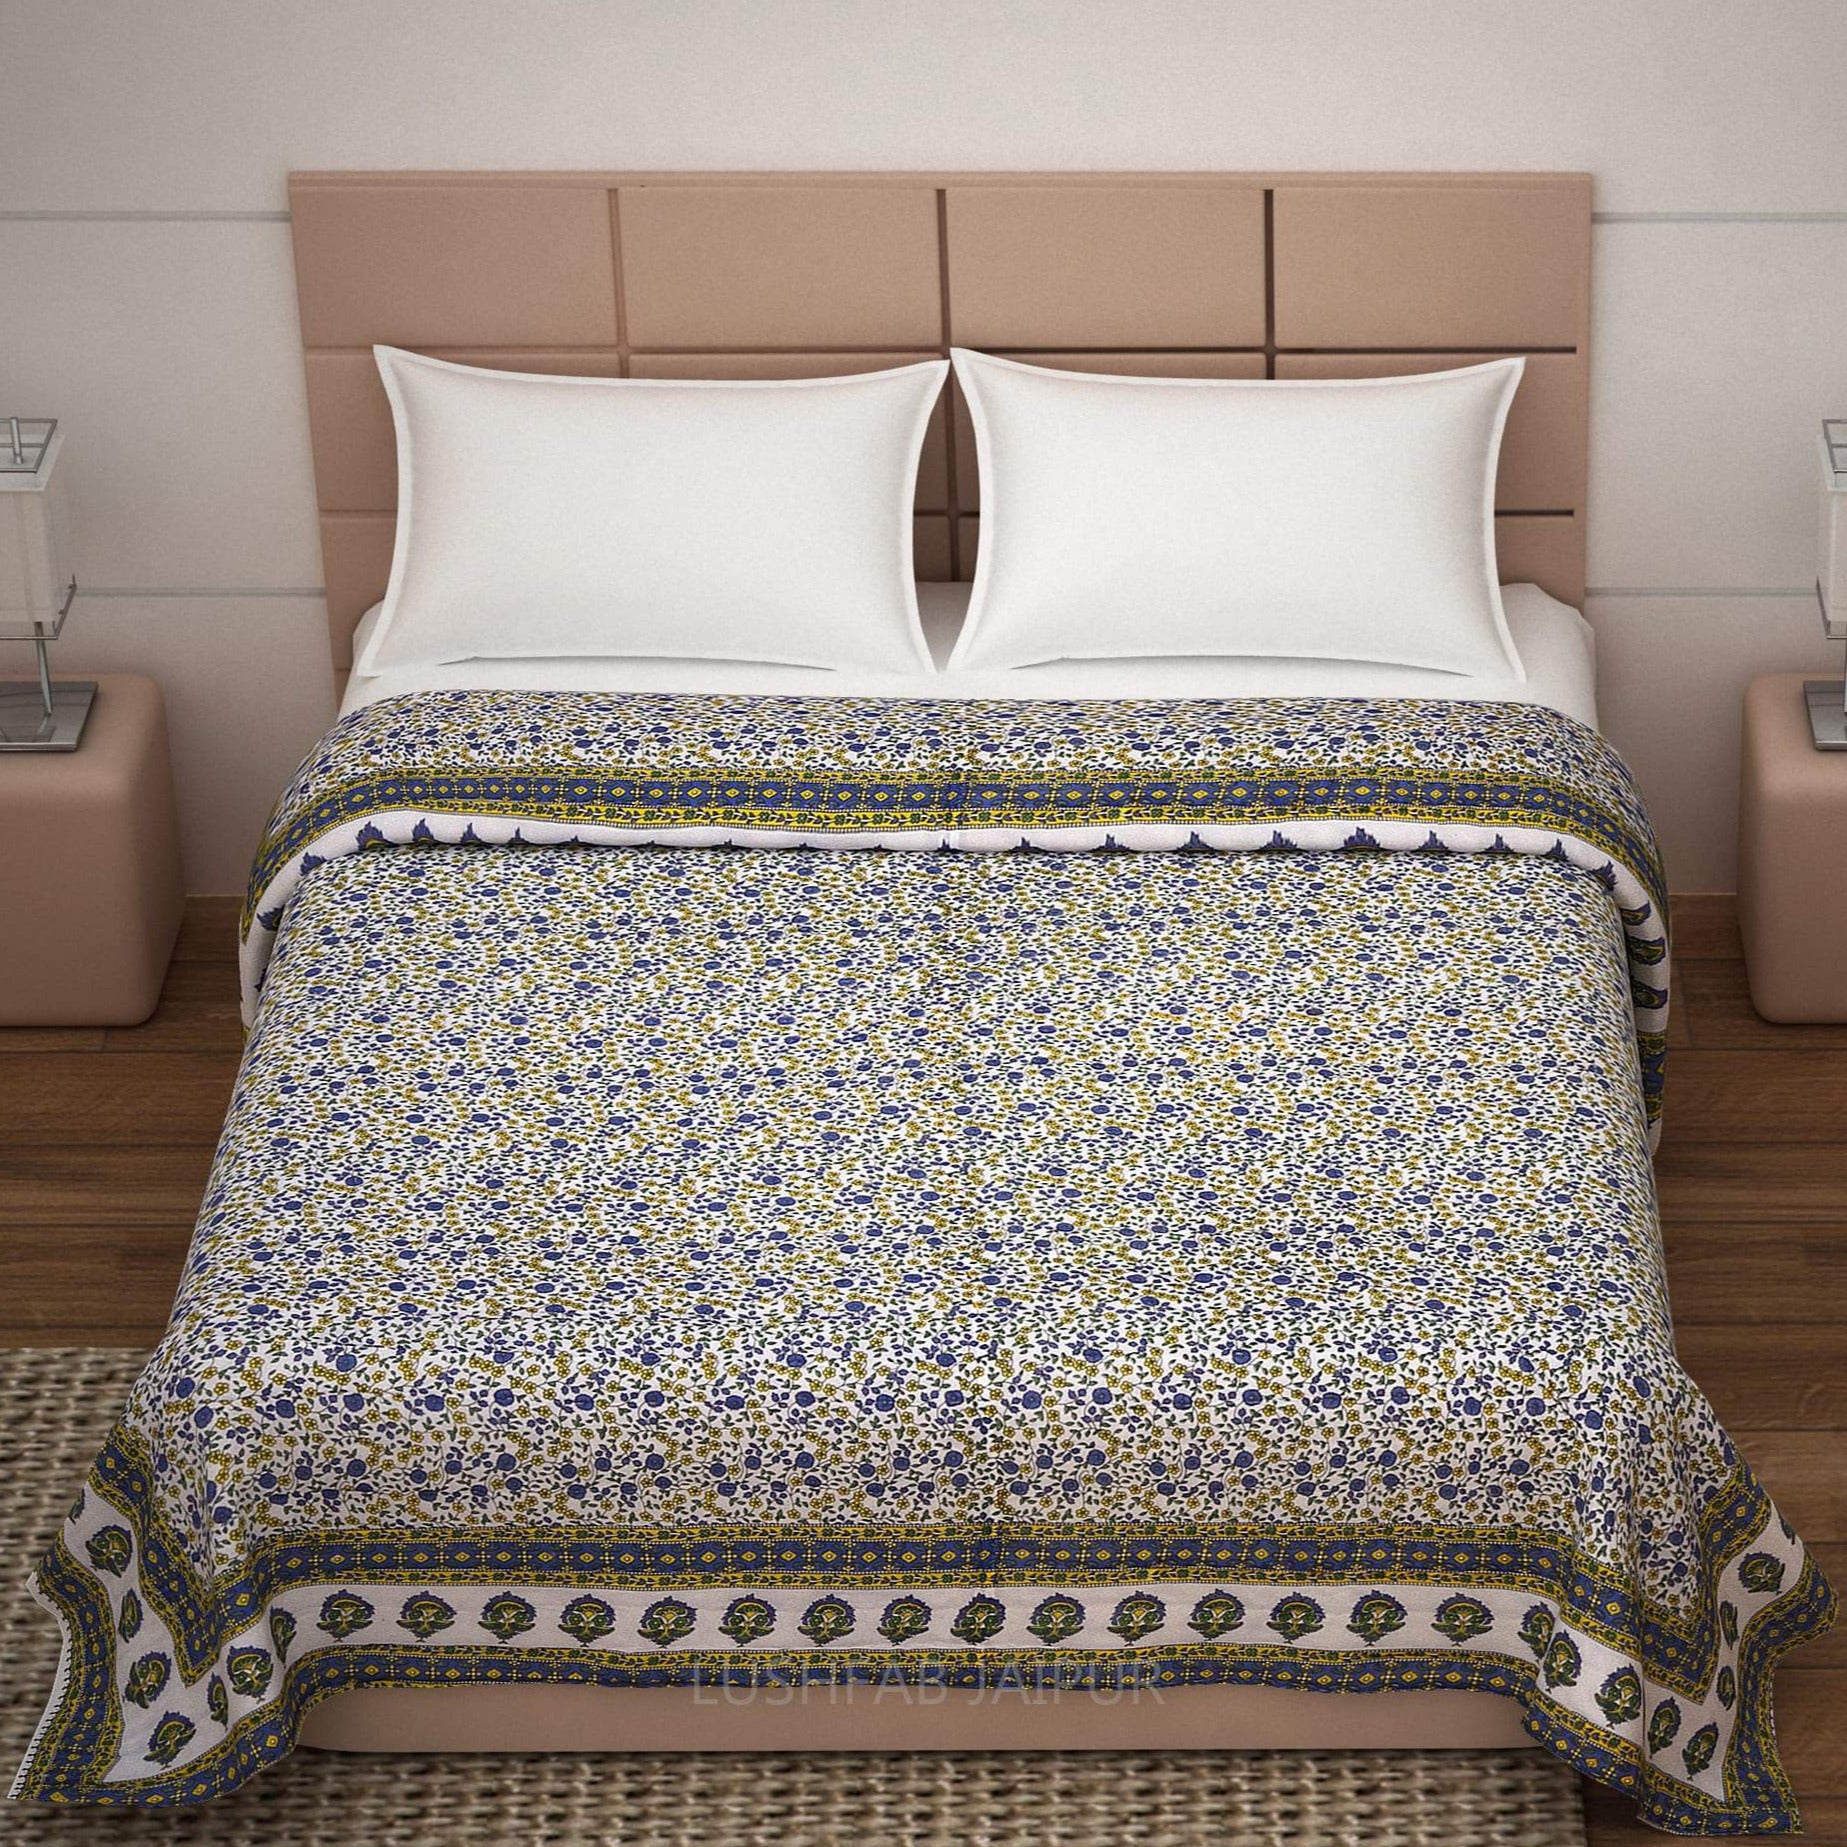 Buy Jaipuri Razai Quilt Online Double Bed at Best Price India- Lushfab ...